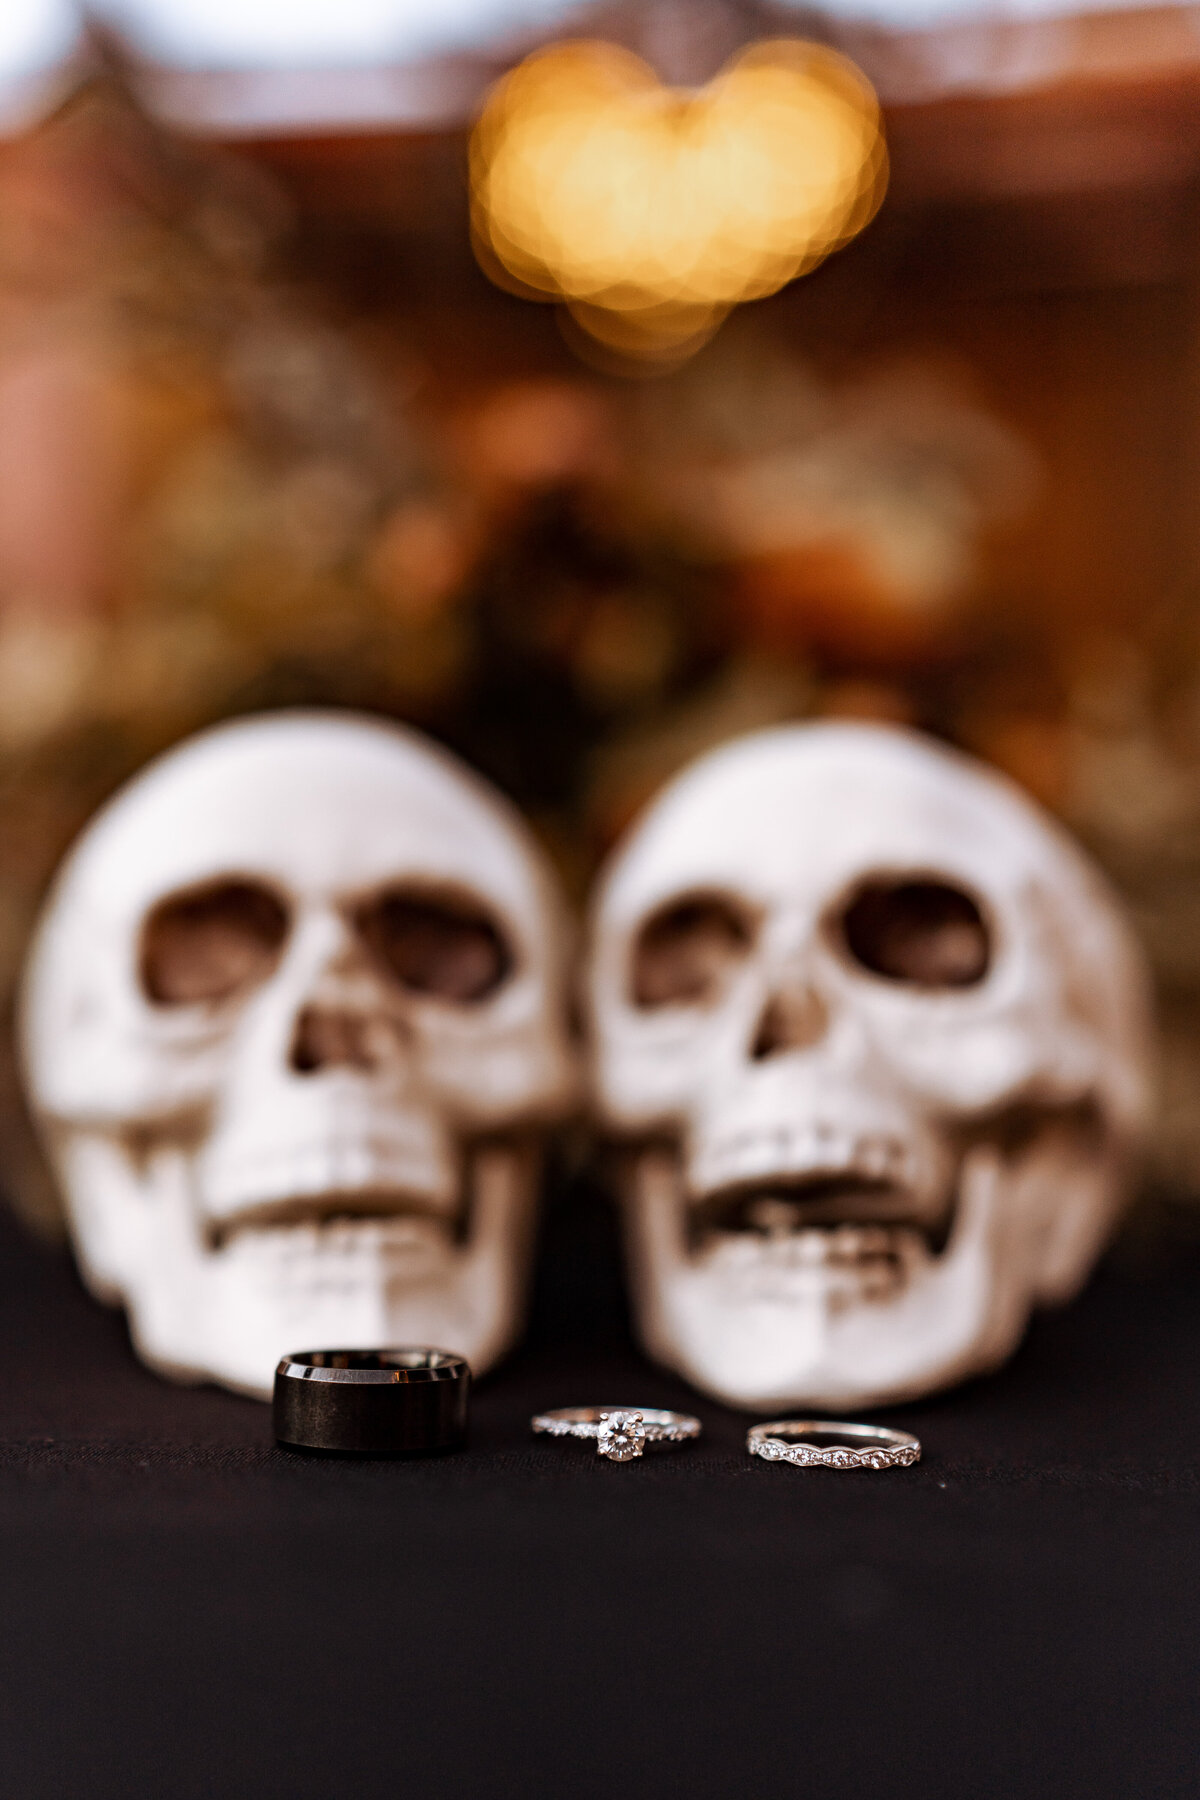 bates mansion tucson arizona halloween wedding photos (4)